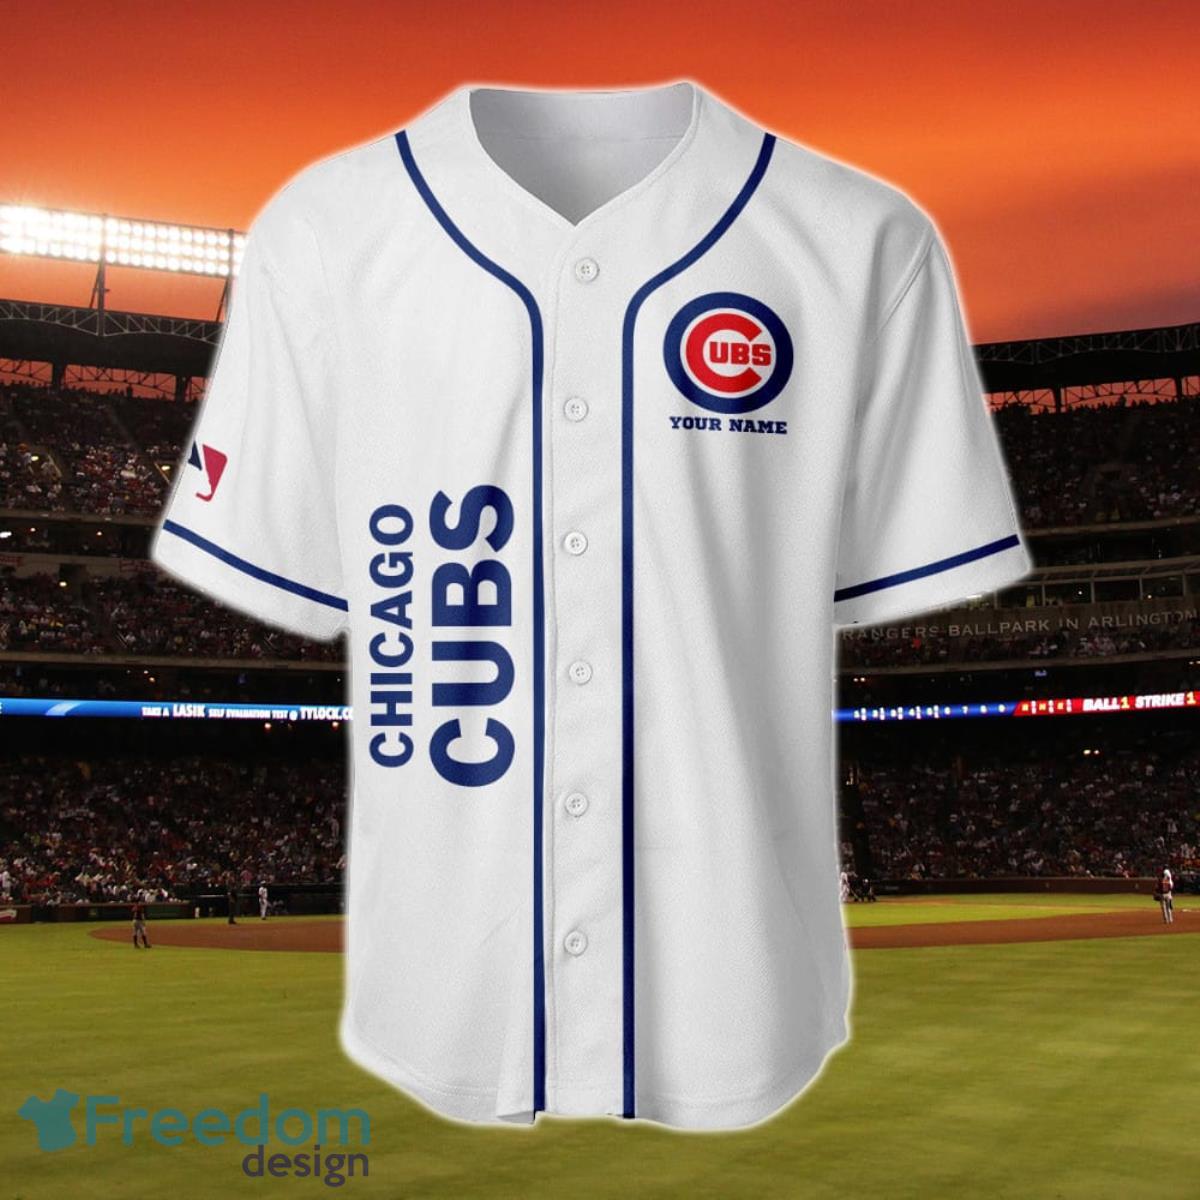 chicago cubs baseball apparel